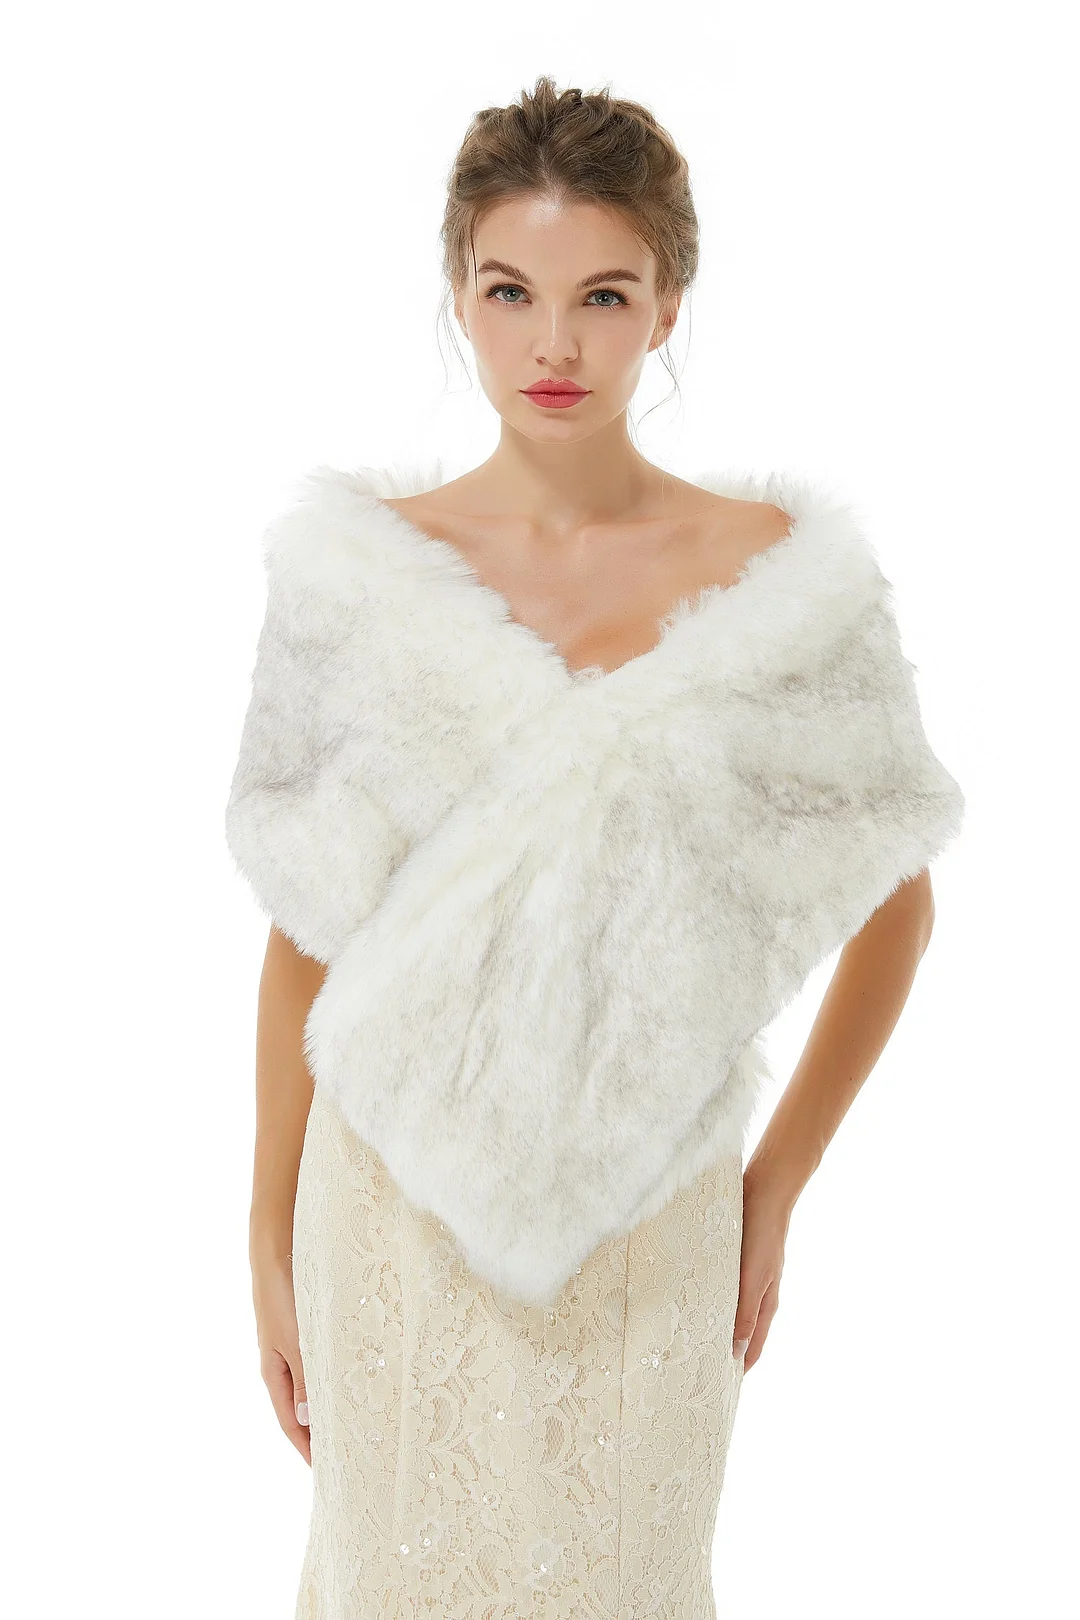 Luluslly Beautiful Ivory Faux Fur Wedding Shawl for Brides Online